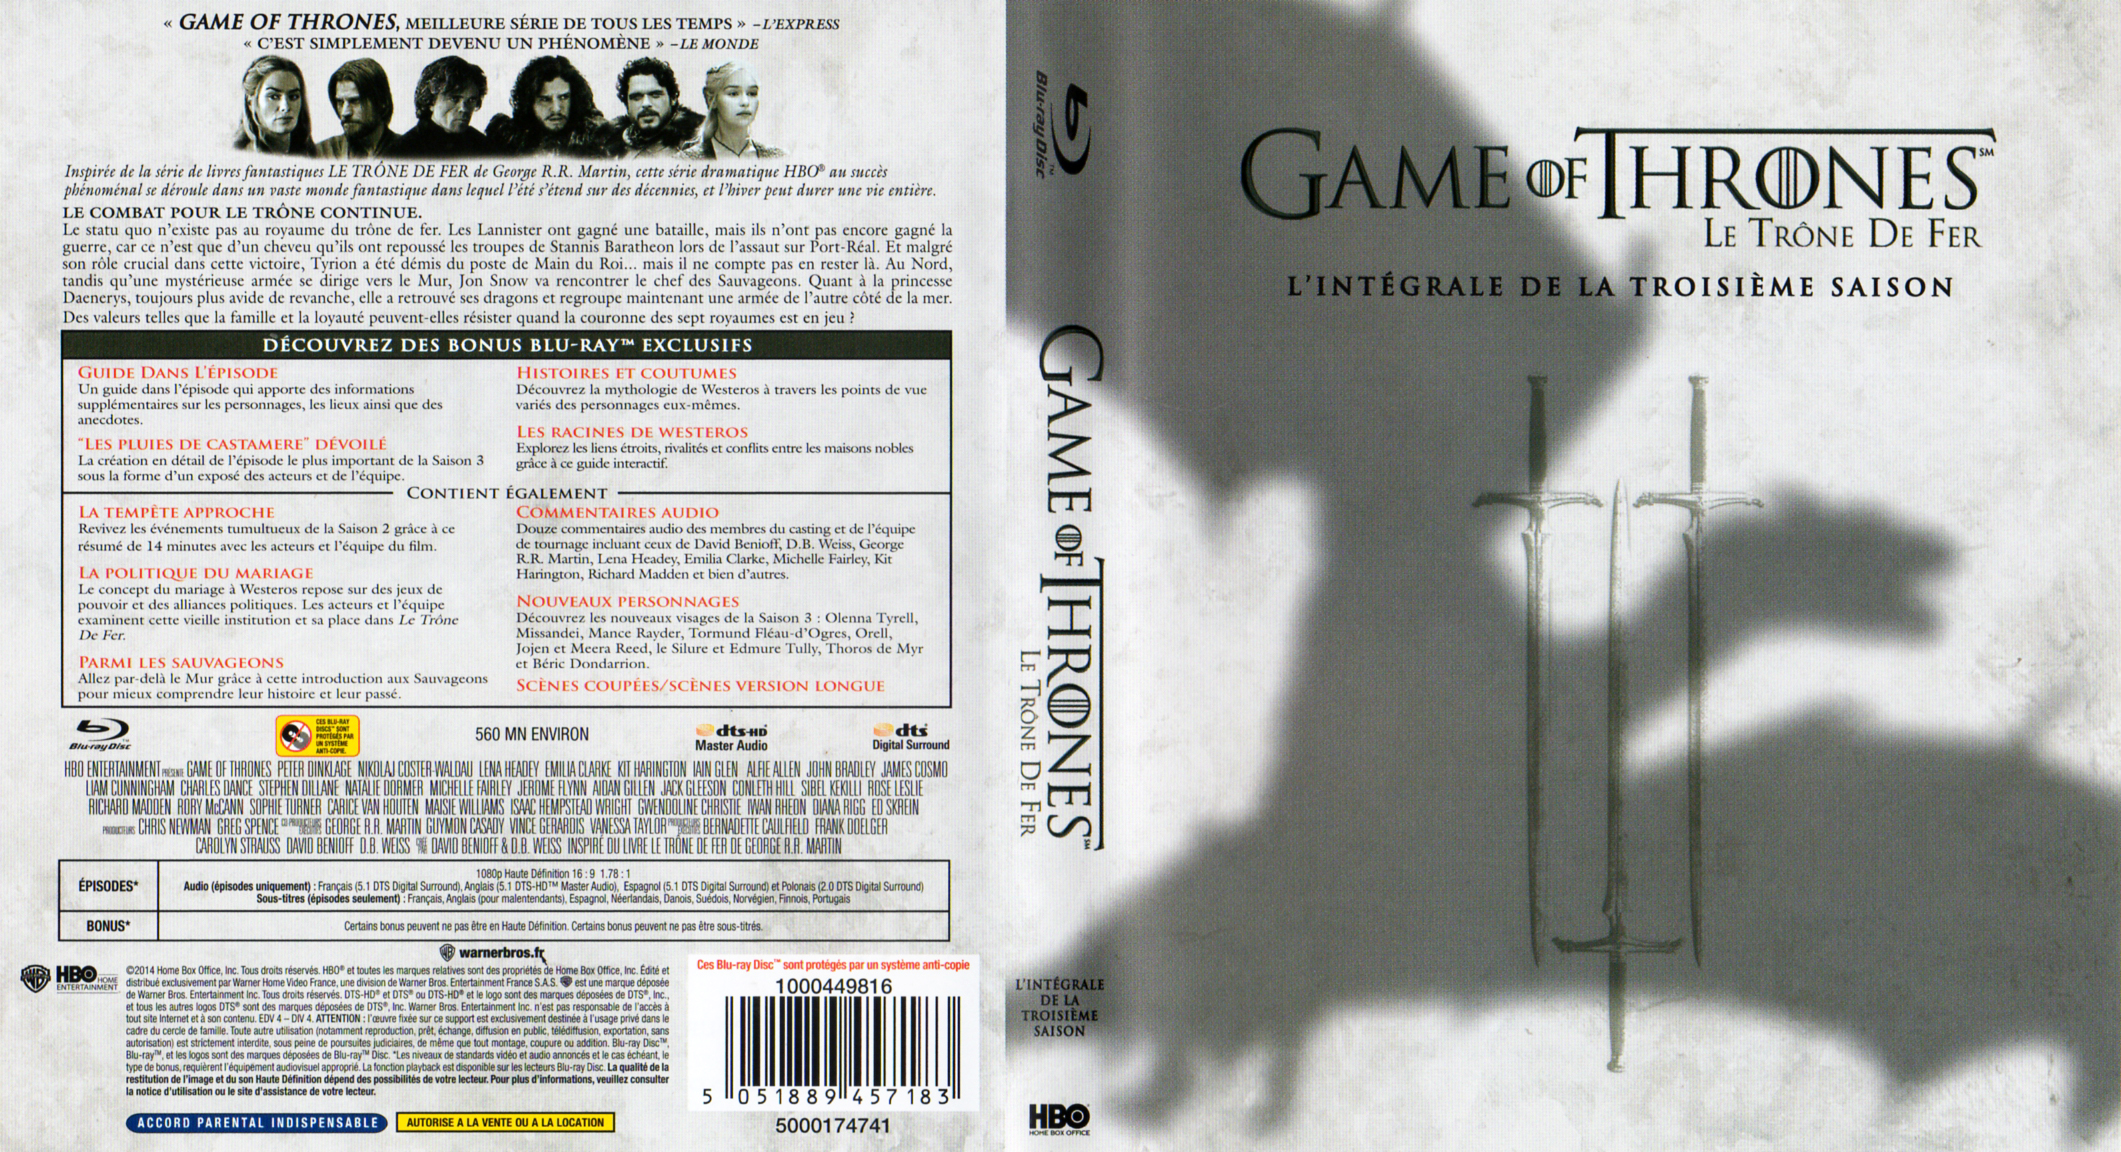 Jaquette DVD Game of thrones (le trone de fer) Saison 3 (BLU-RAY)